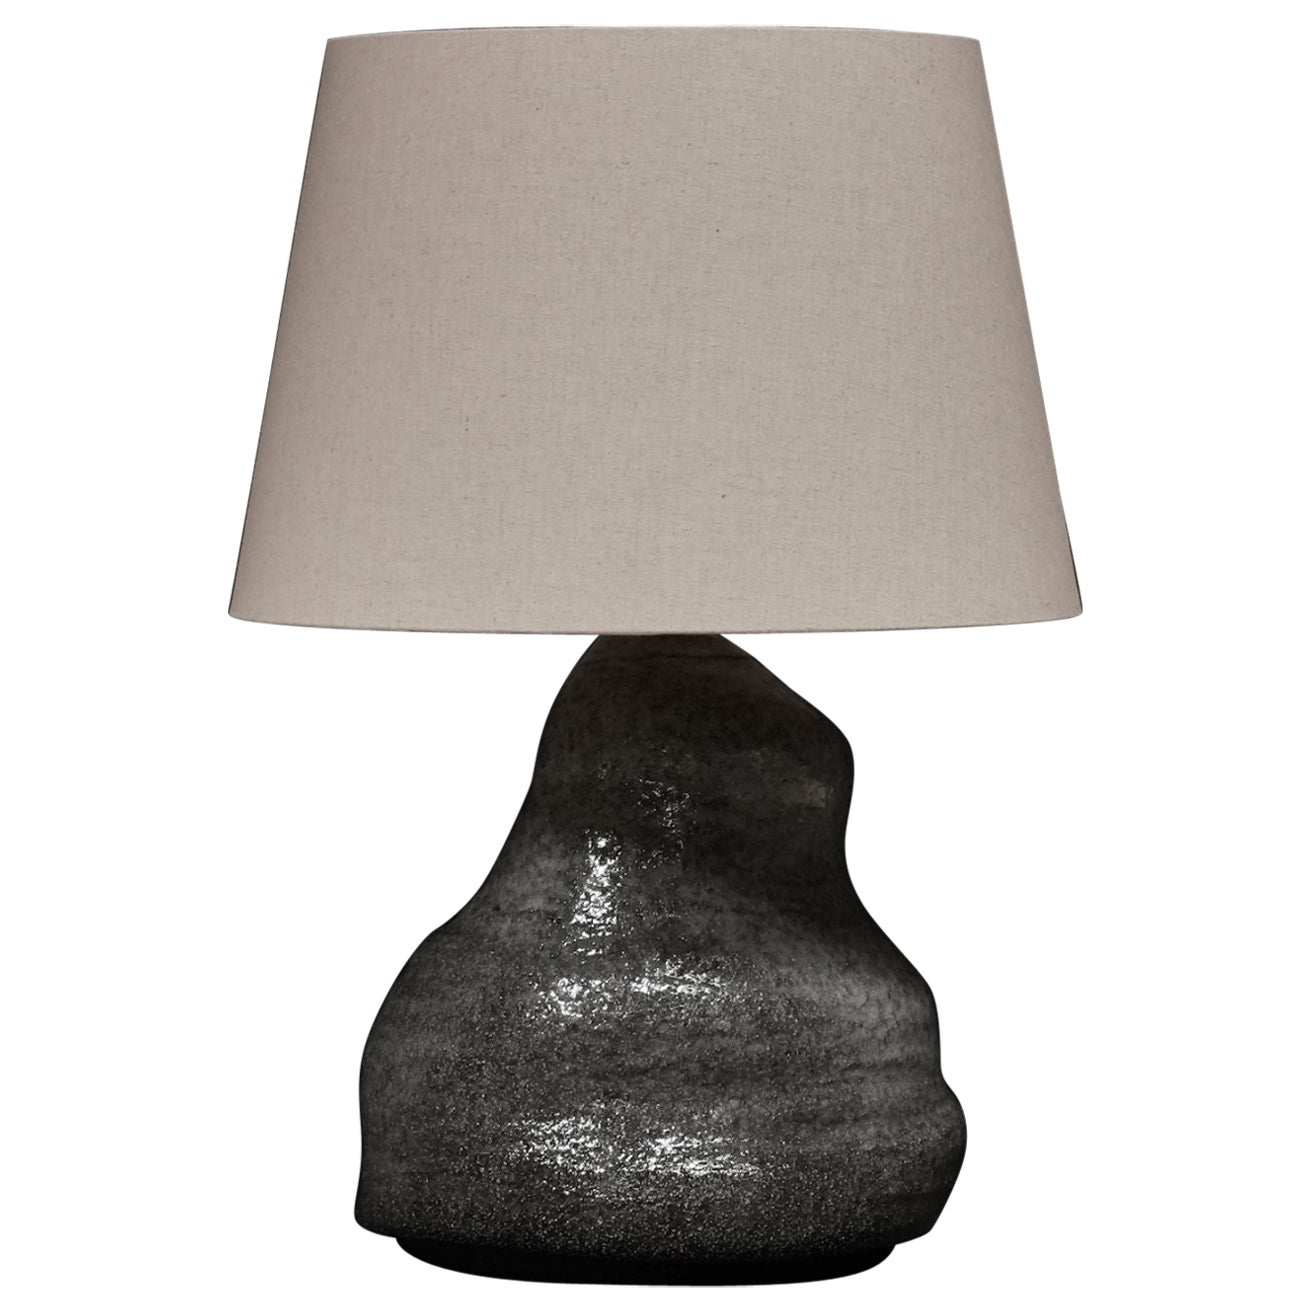 Free Form Ceramic Table Lamp